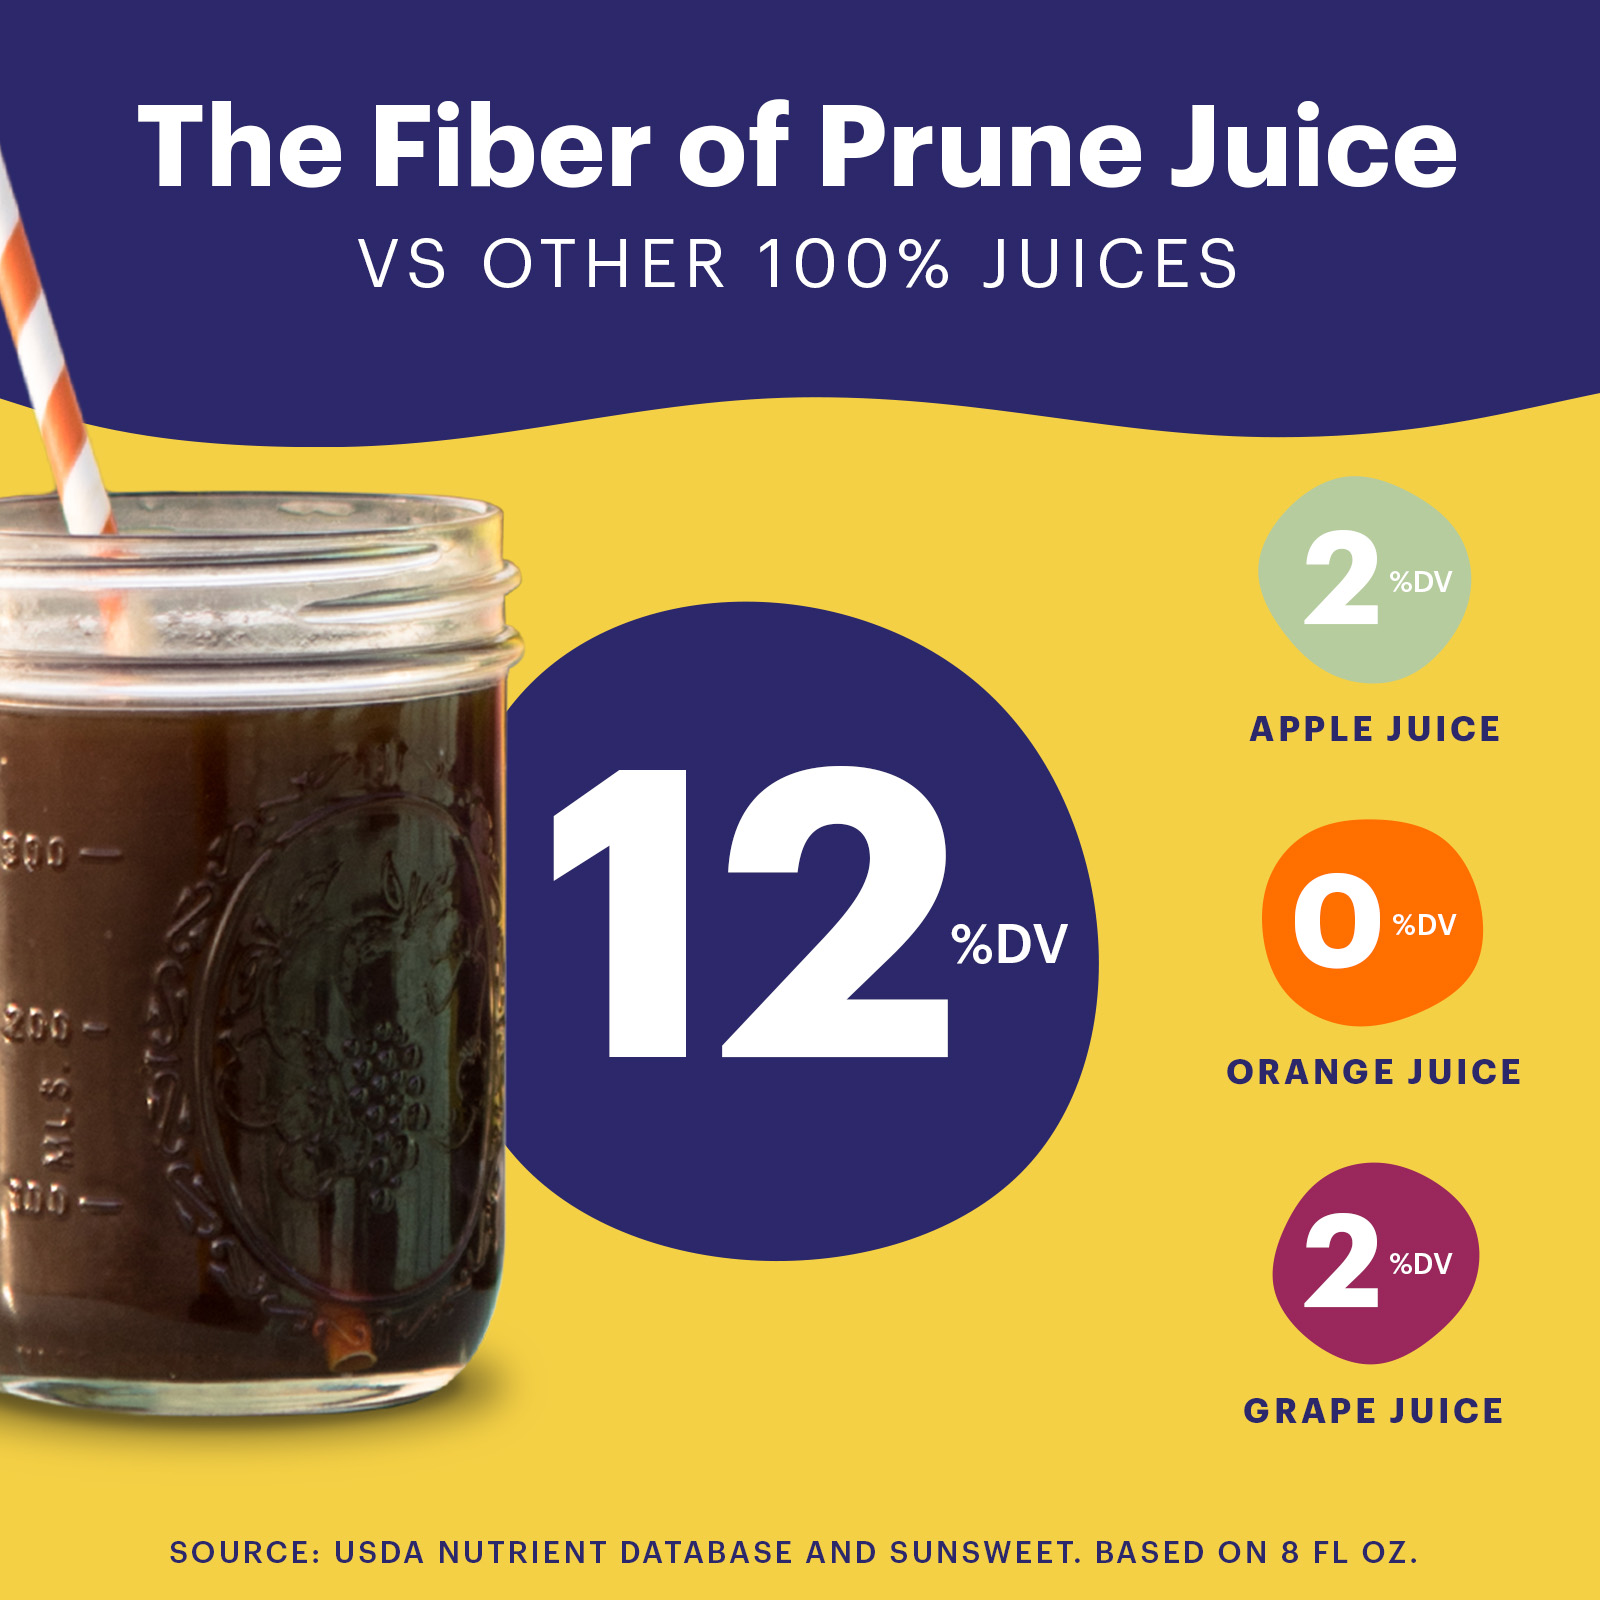 The Fiber of Prune Juice VS Other 100% Juices